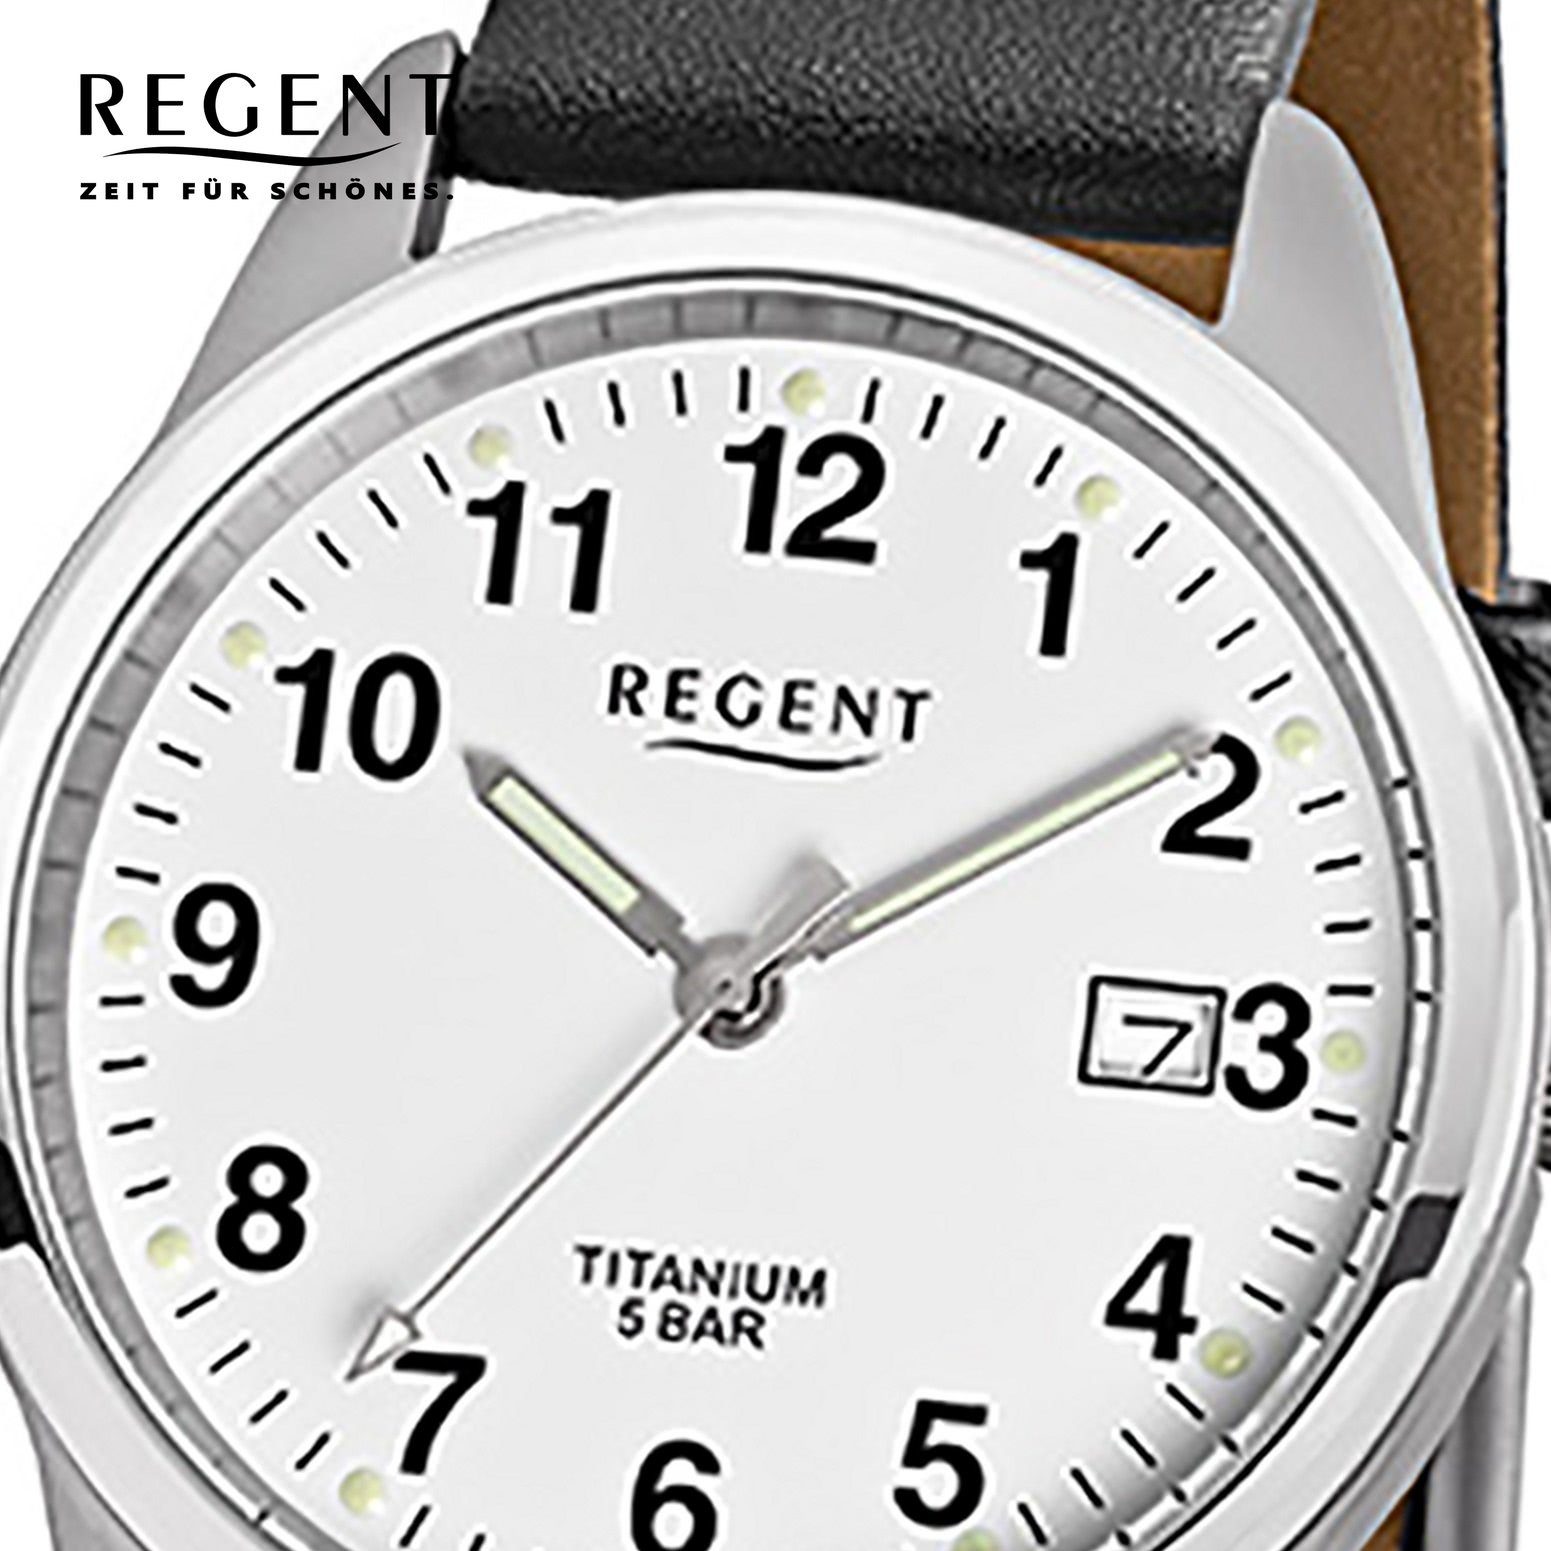 Lederarmband Regent Quarzuhr schwarz Armbanduhr Herren-Armbanduhr rund, Regent Analog, (ca. mittel Herren 36mm),